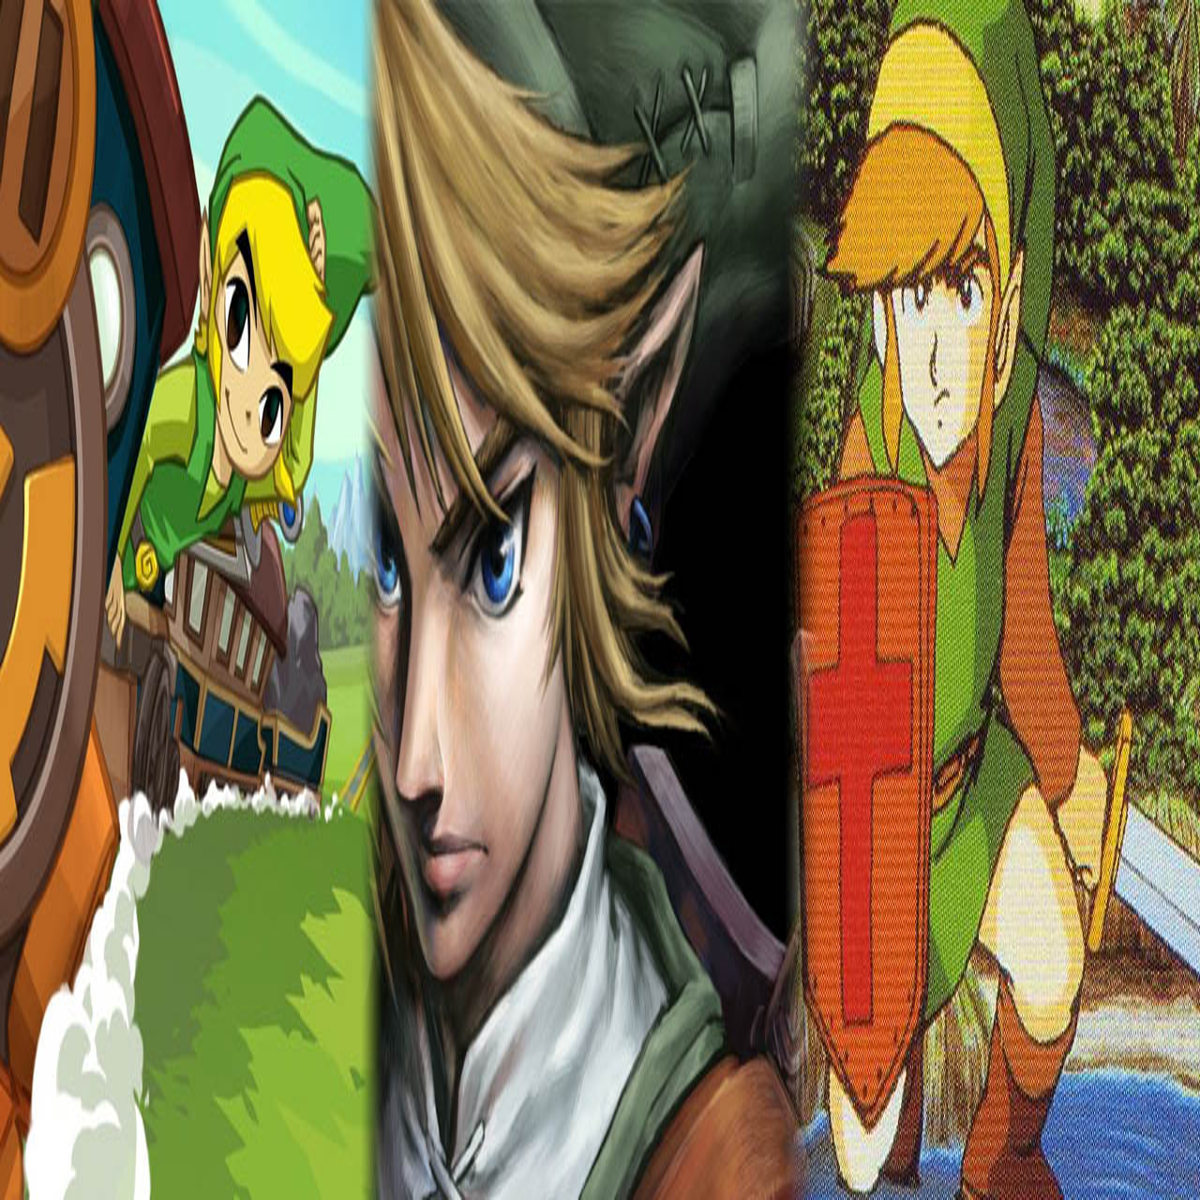 Zelda II: The Adventure of Link Complete Manga Trilogy 